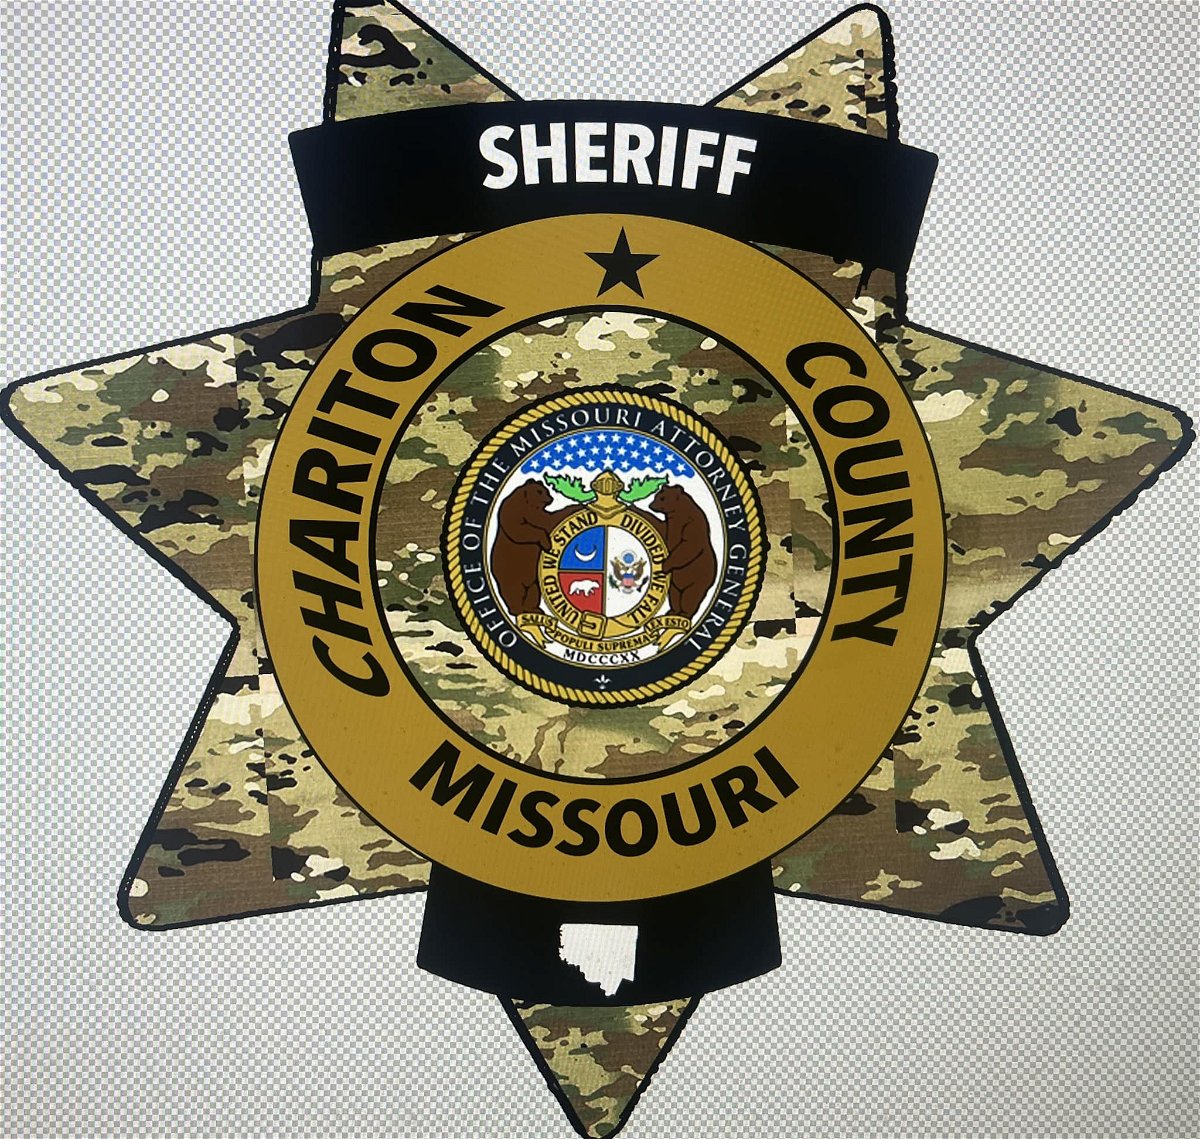 Chariton County Sheriff's Office logo